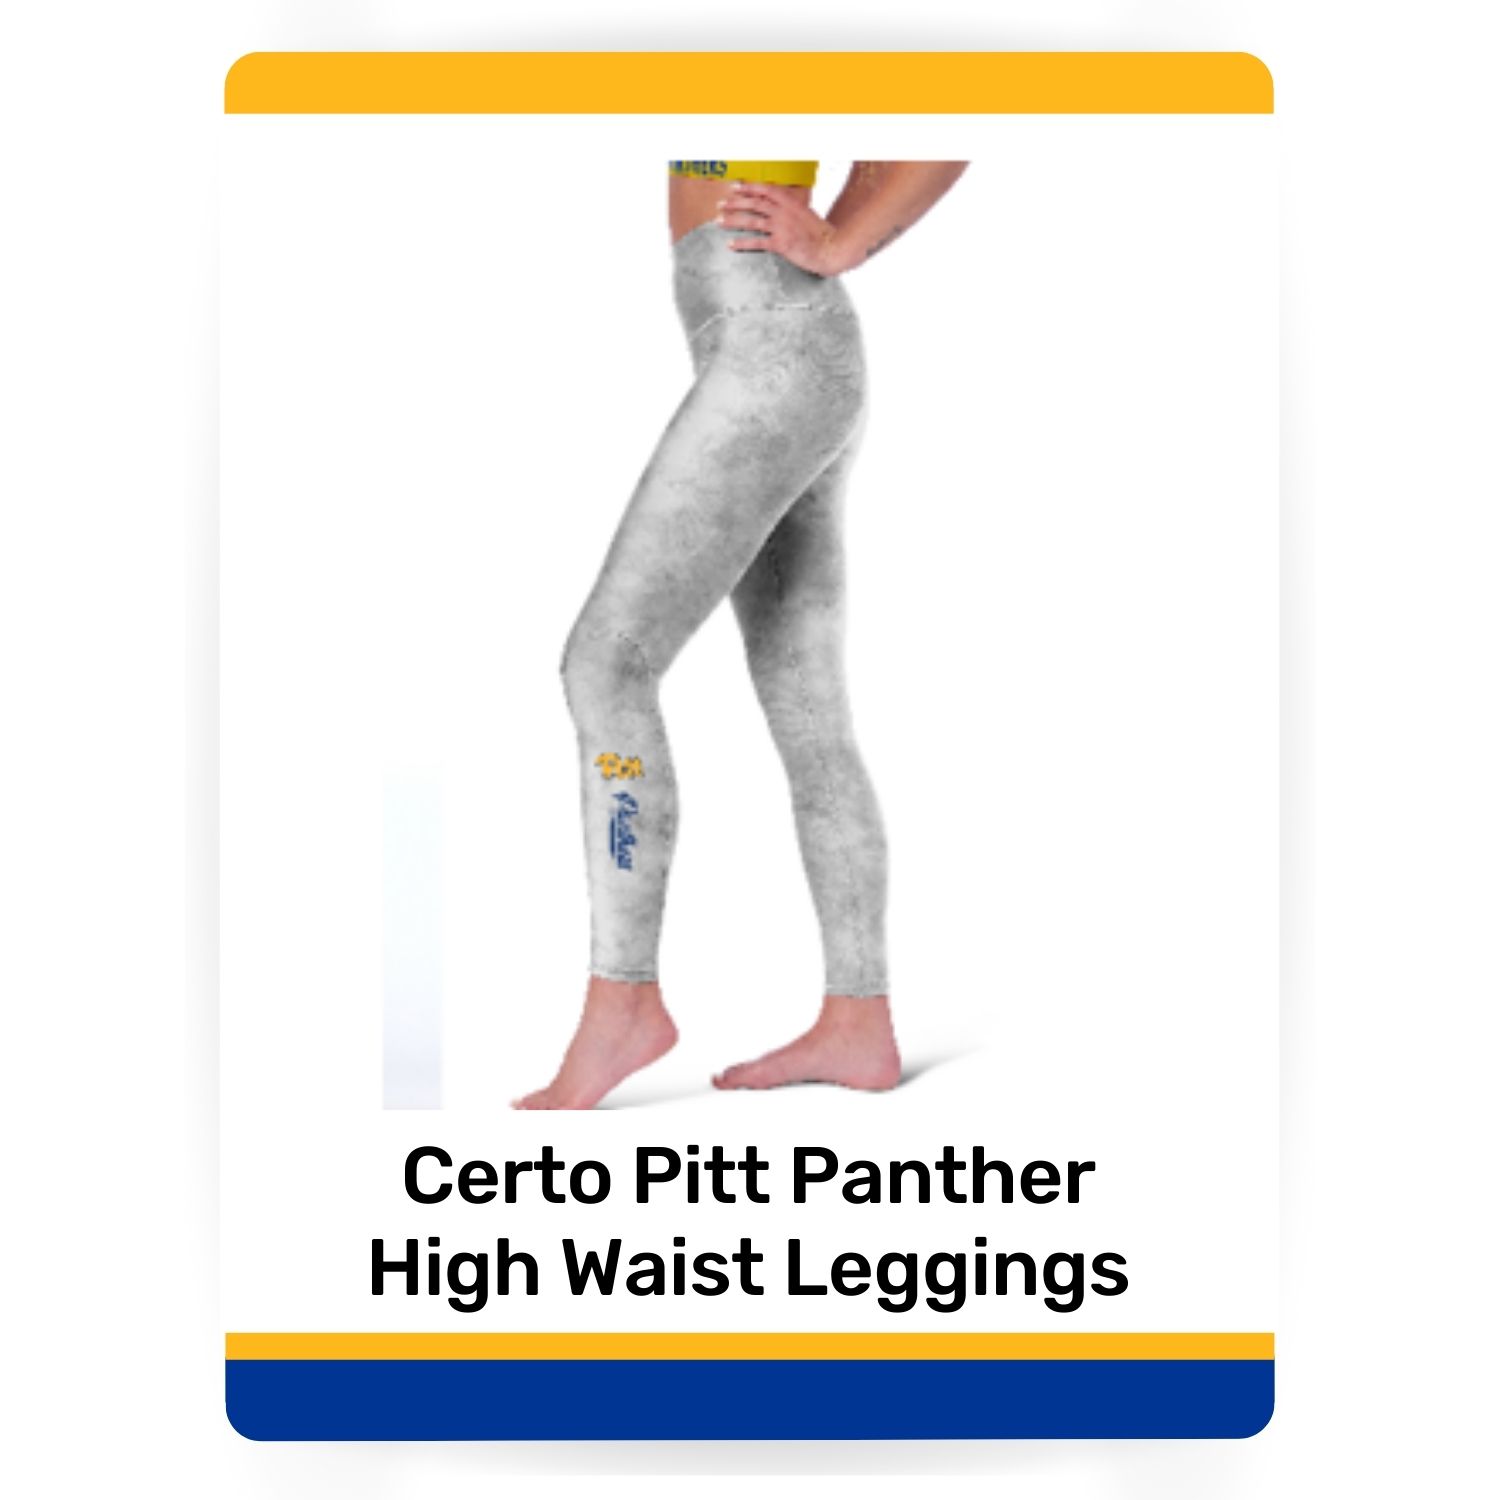 Certo Pitt Panther High Waist Leggings